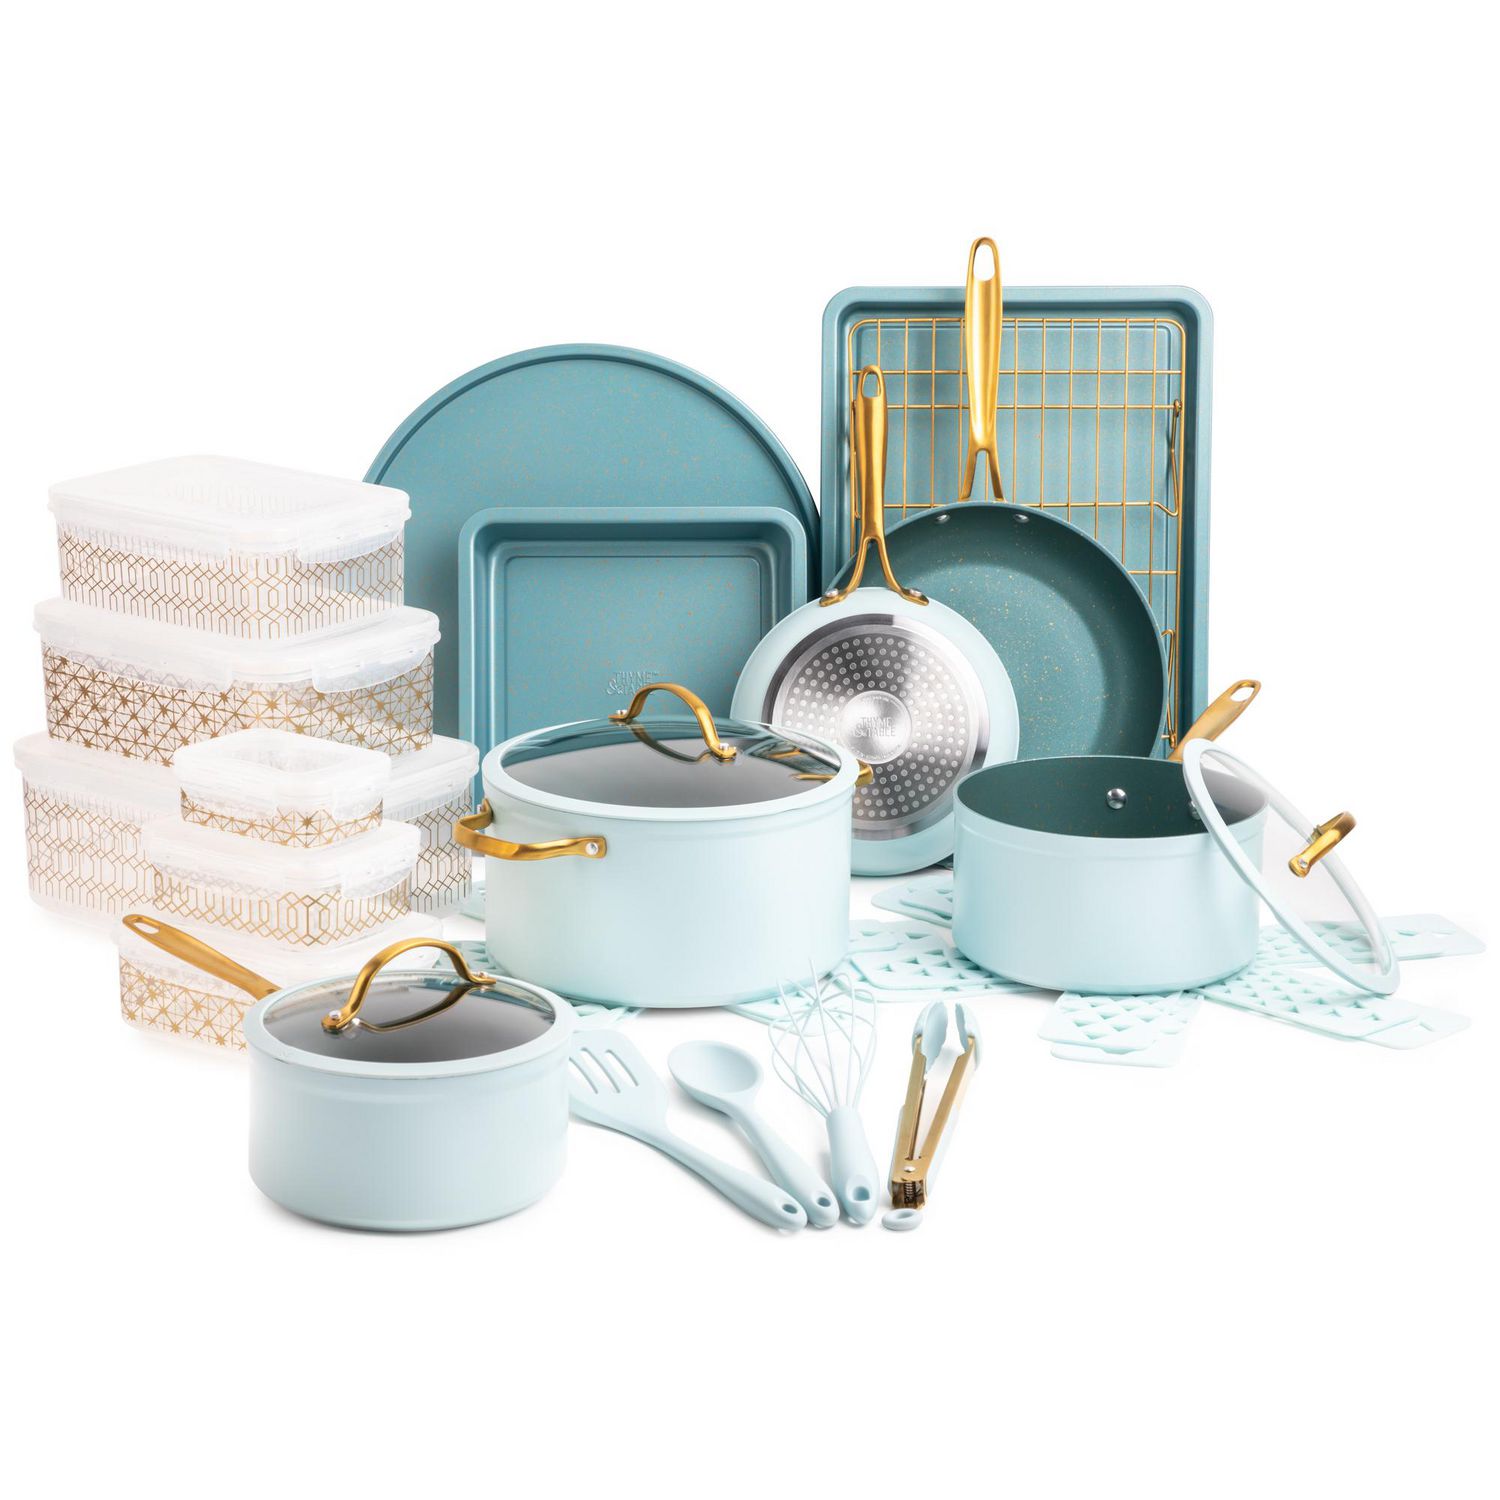 Thyme & Table 32-Piece Cookware & Bakeware Nonstick Set, Sand - Walmart.com